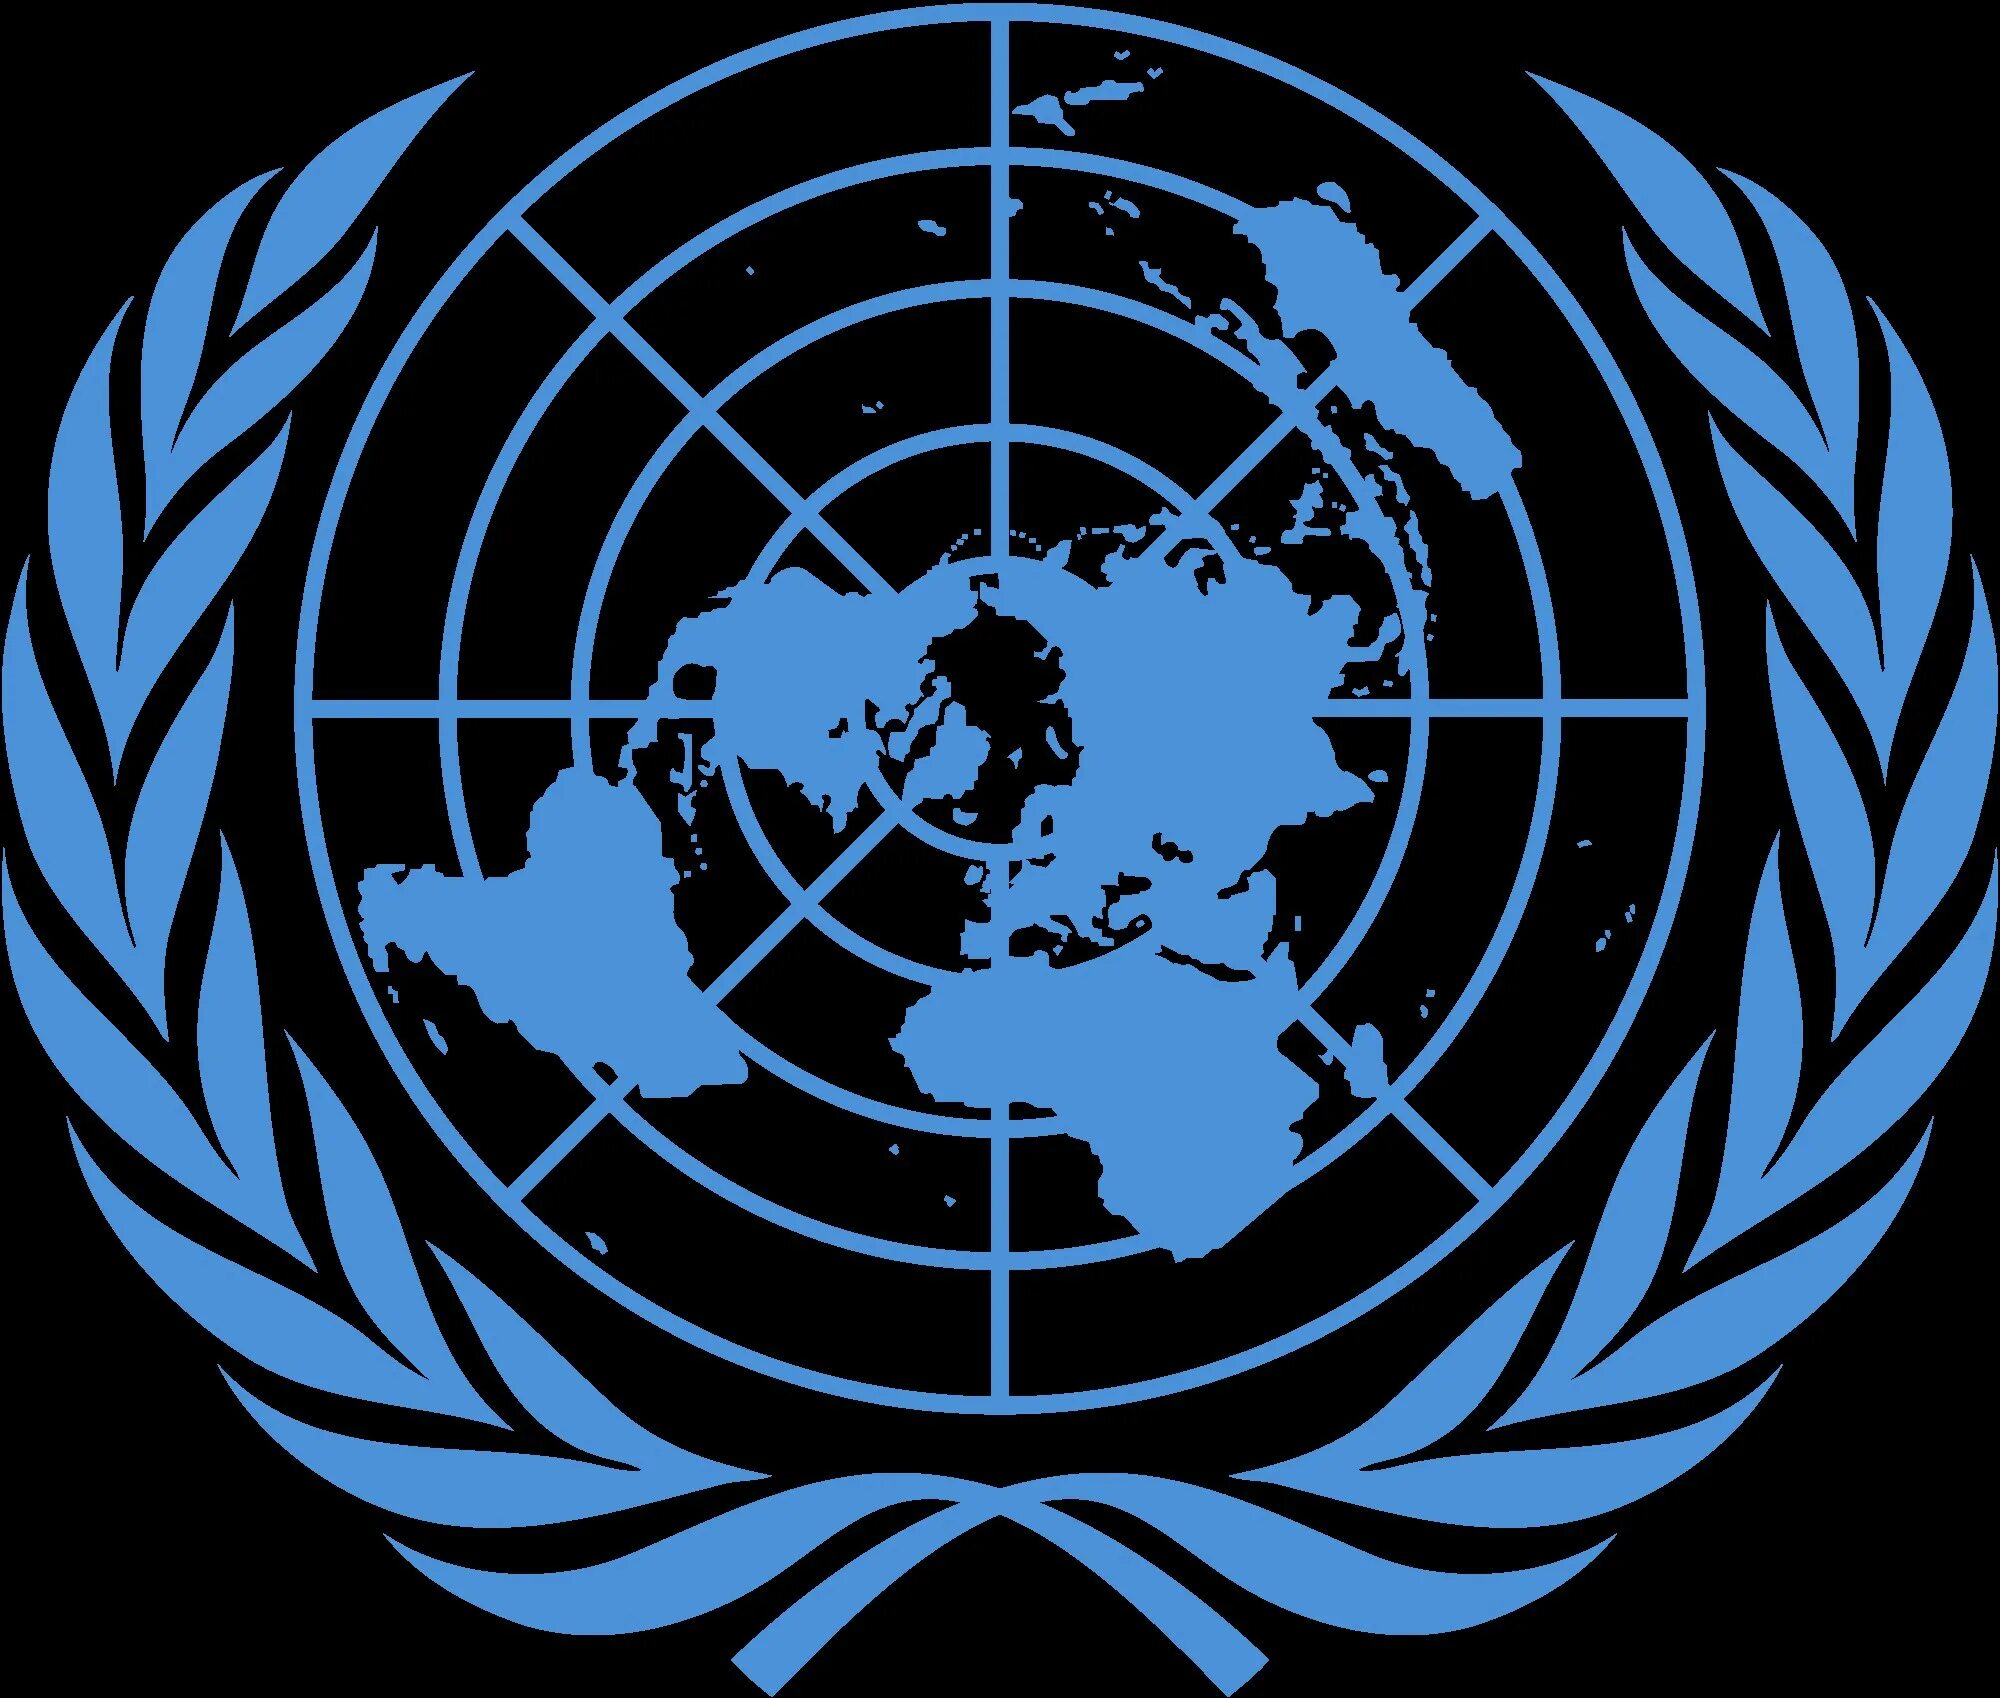 Эгида оон. Символ ООН. Логотип ООН фото. Герб ООН фото. Знак нации.